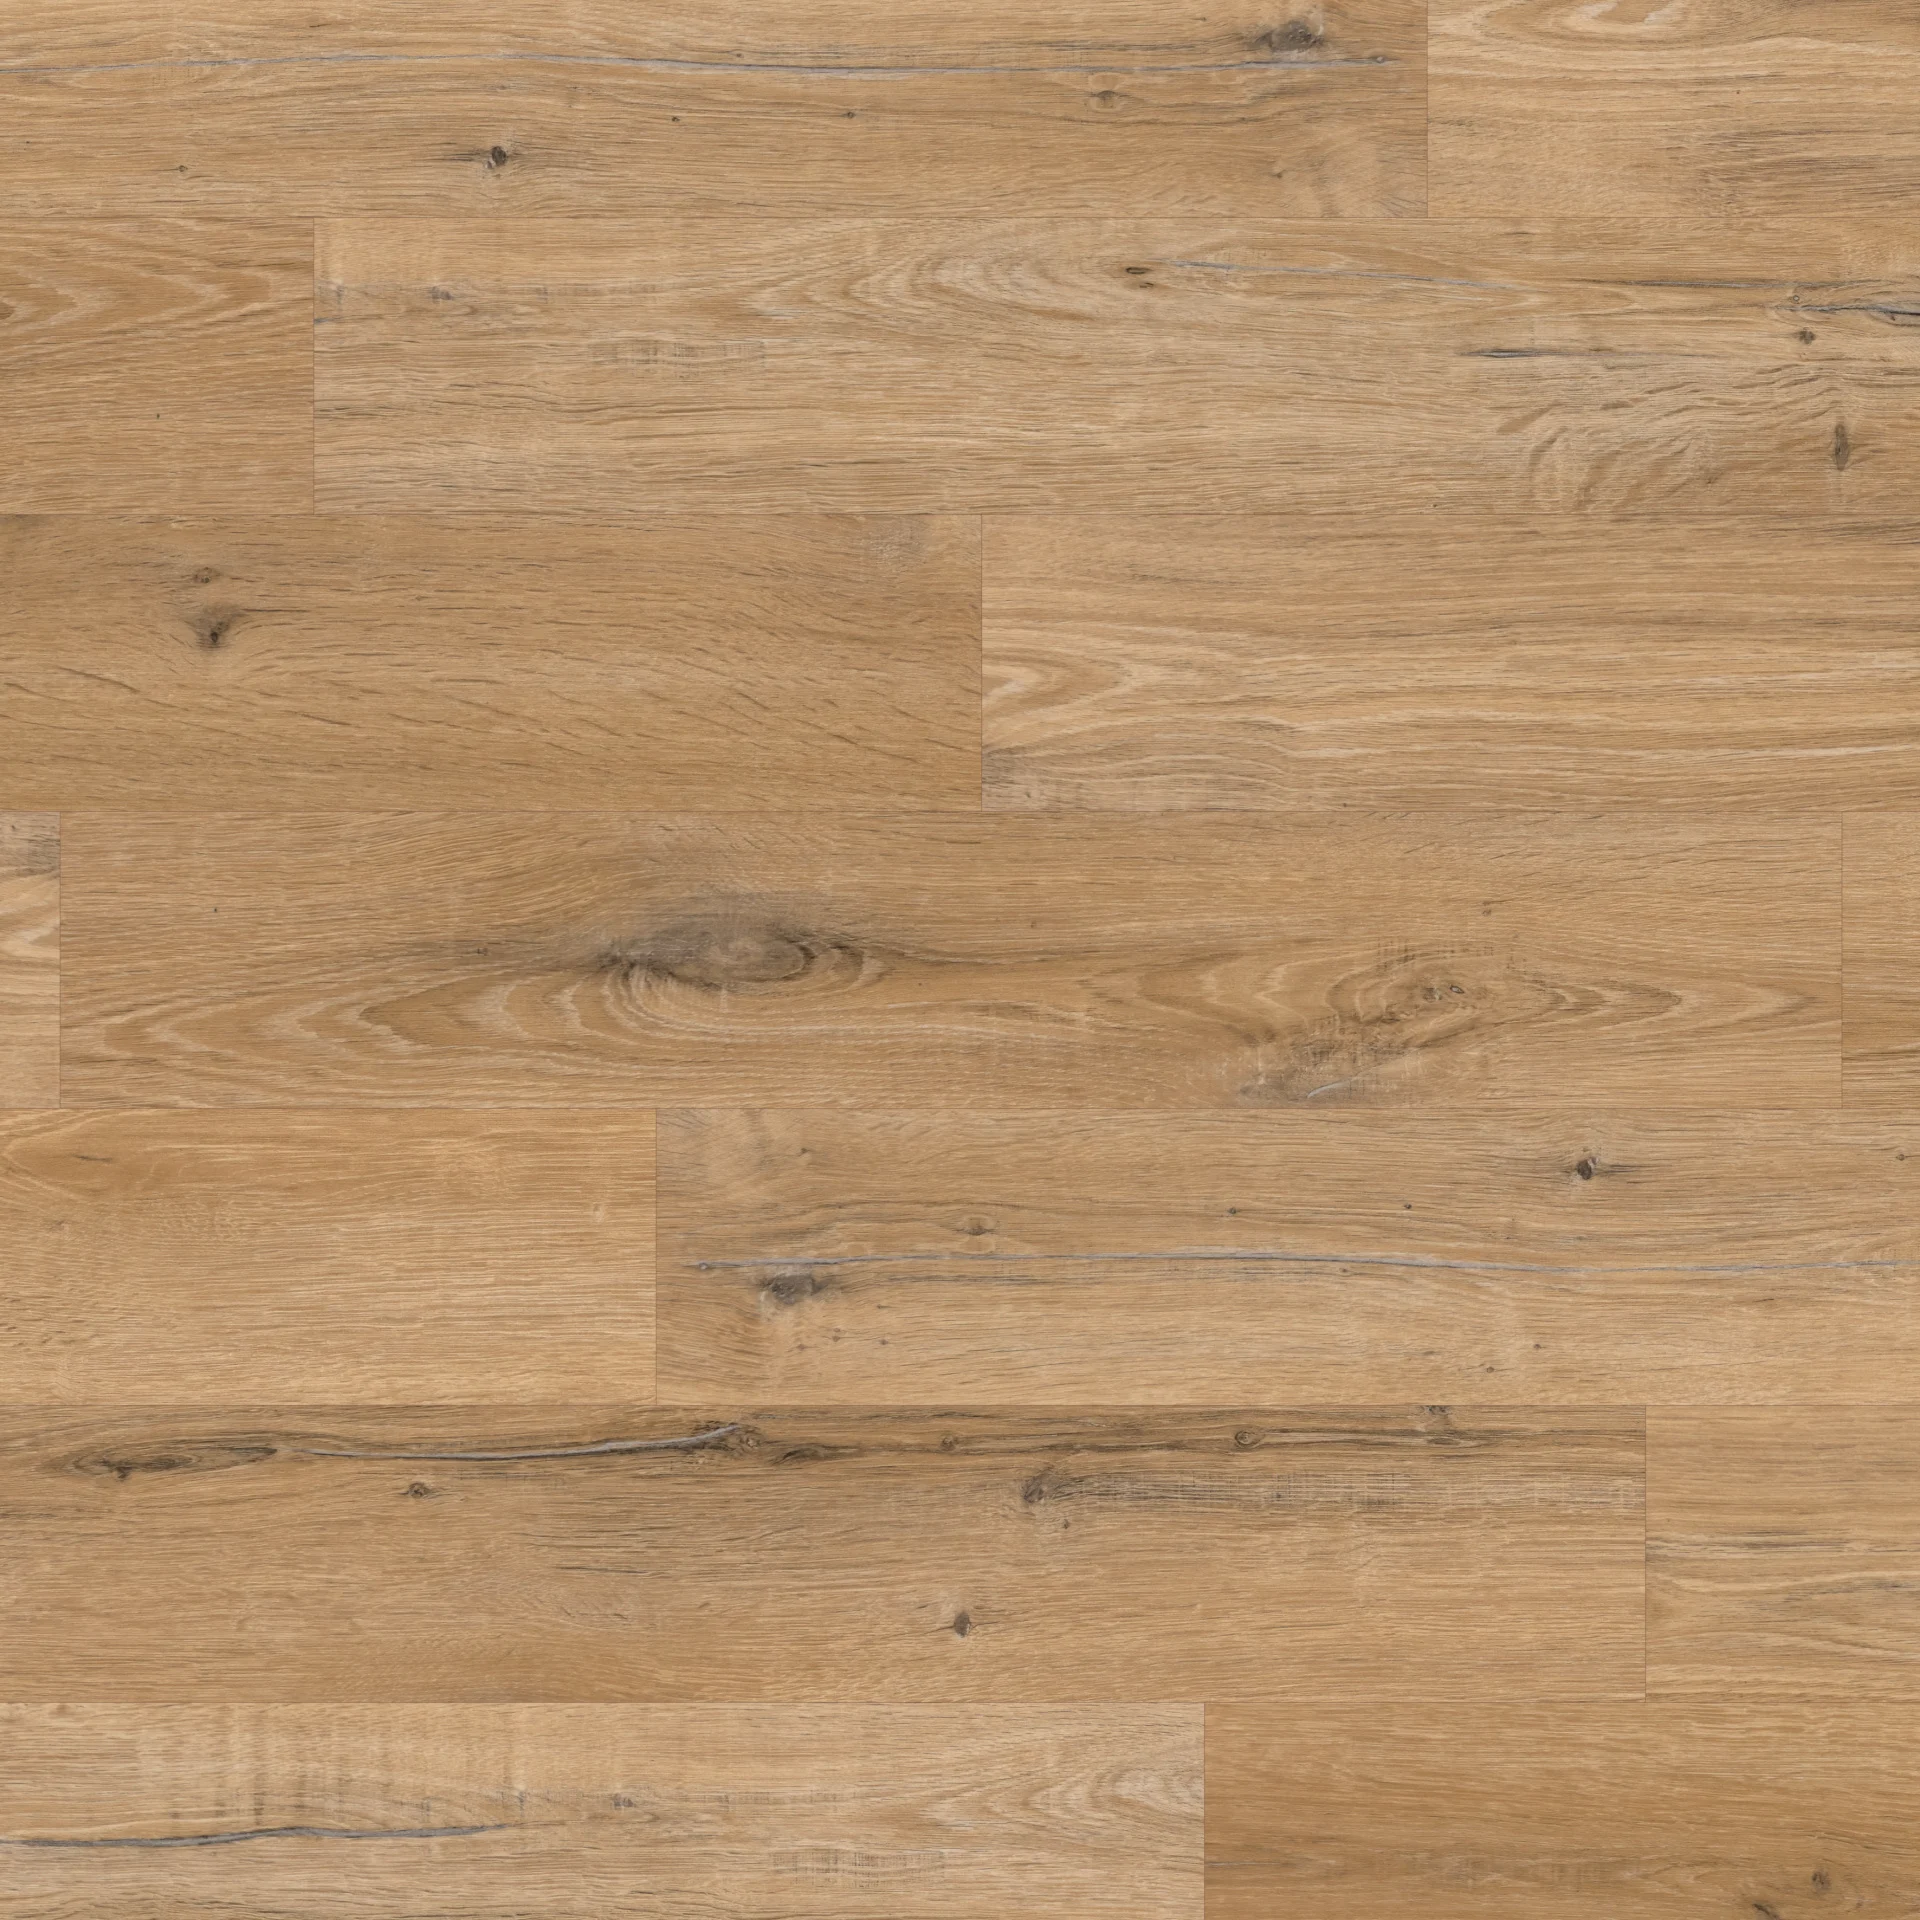 Karndean Knight Tile - Natural Character Oak KP145 Safety Flooring